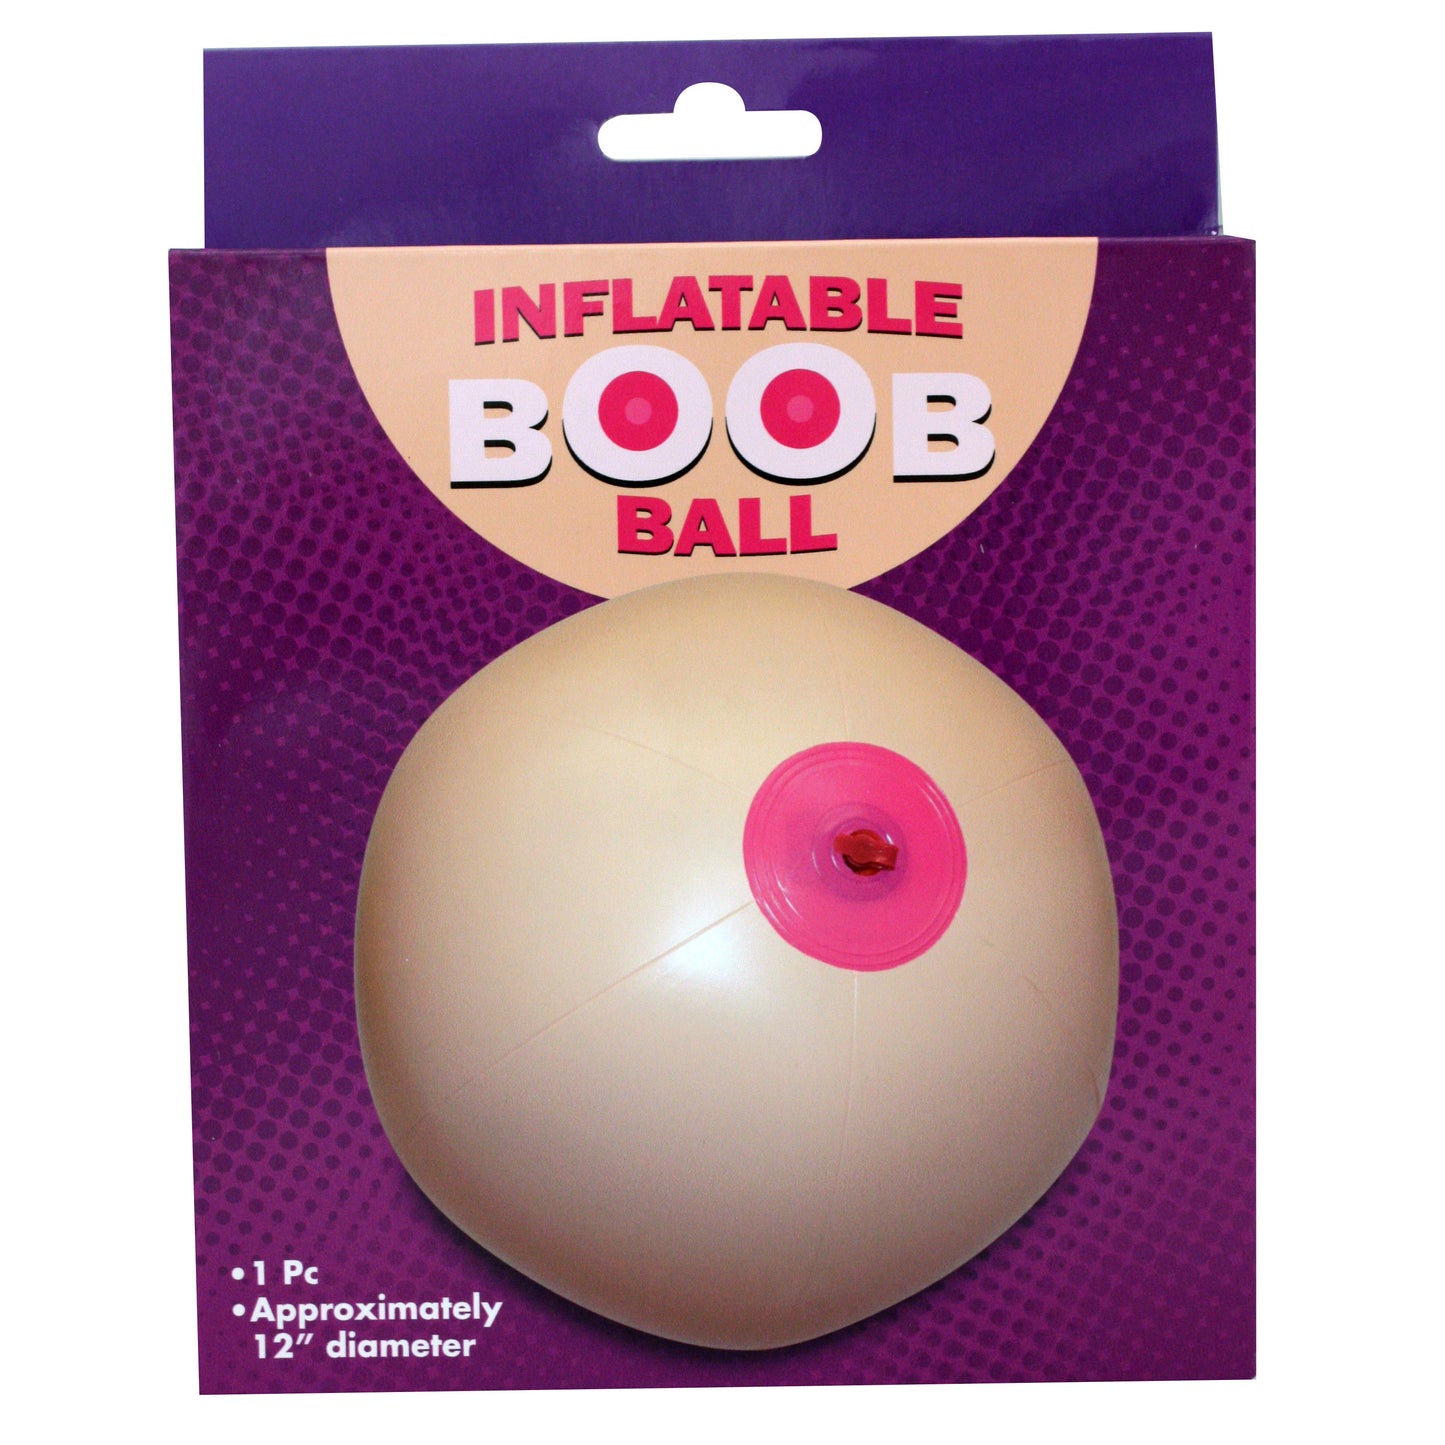 Inflatable Boob Ball